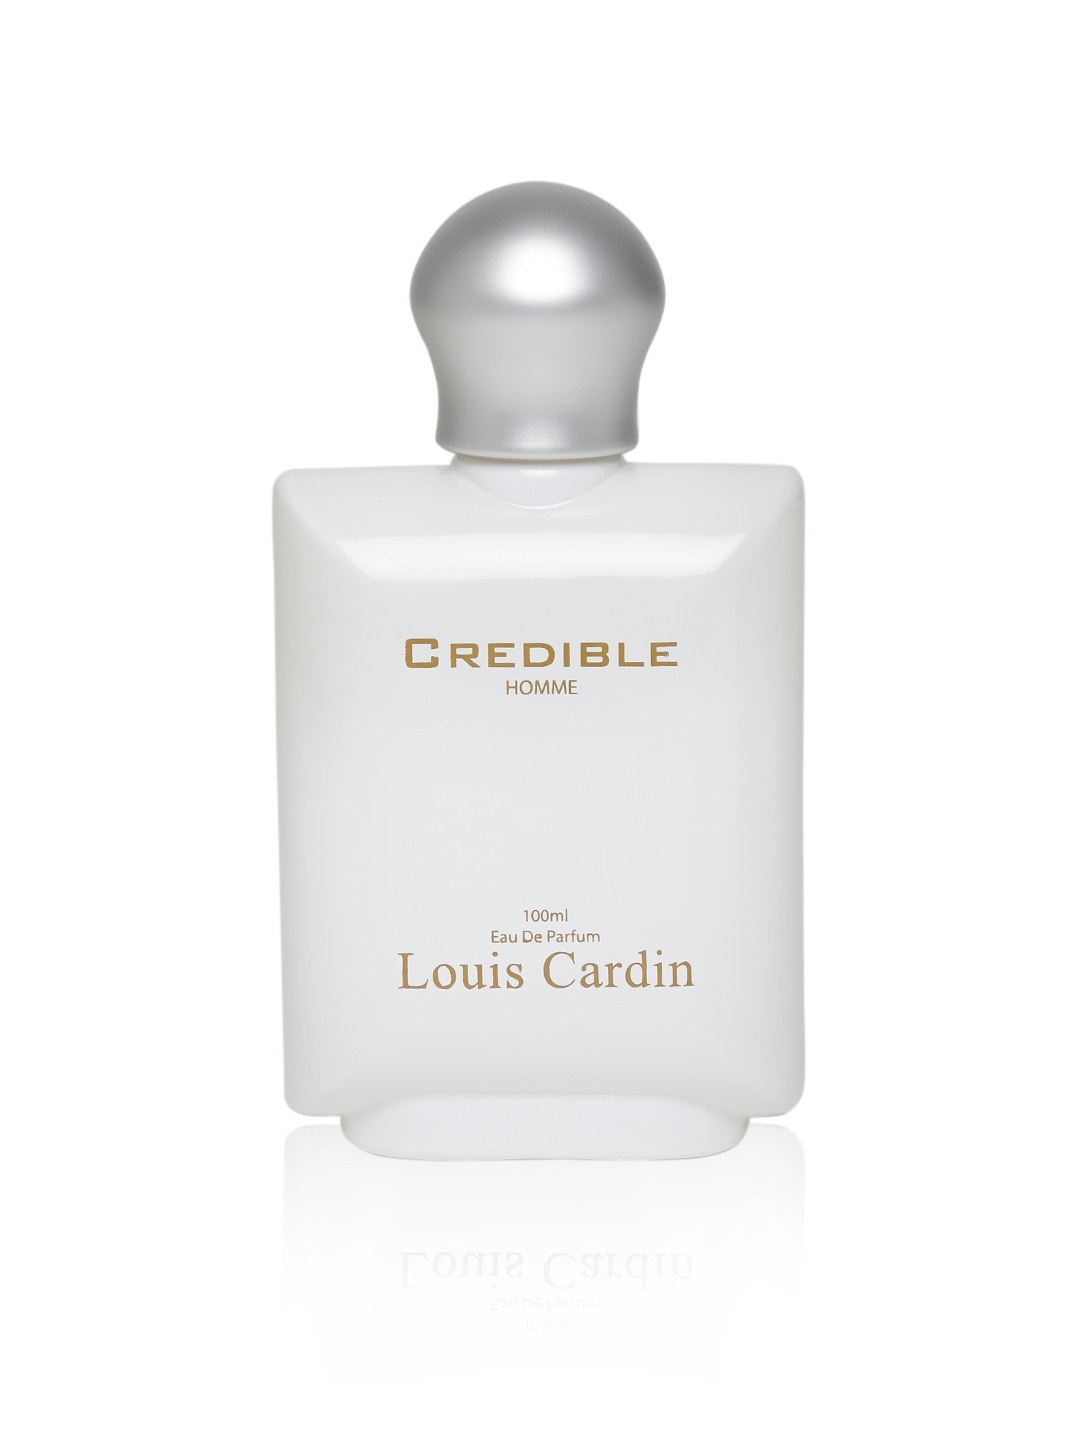 Original Oud from Louis Cardin - Louis Cardin Perfumes